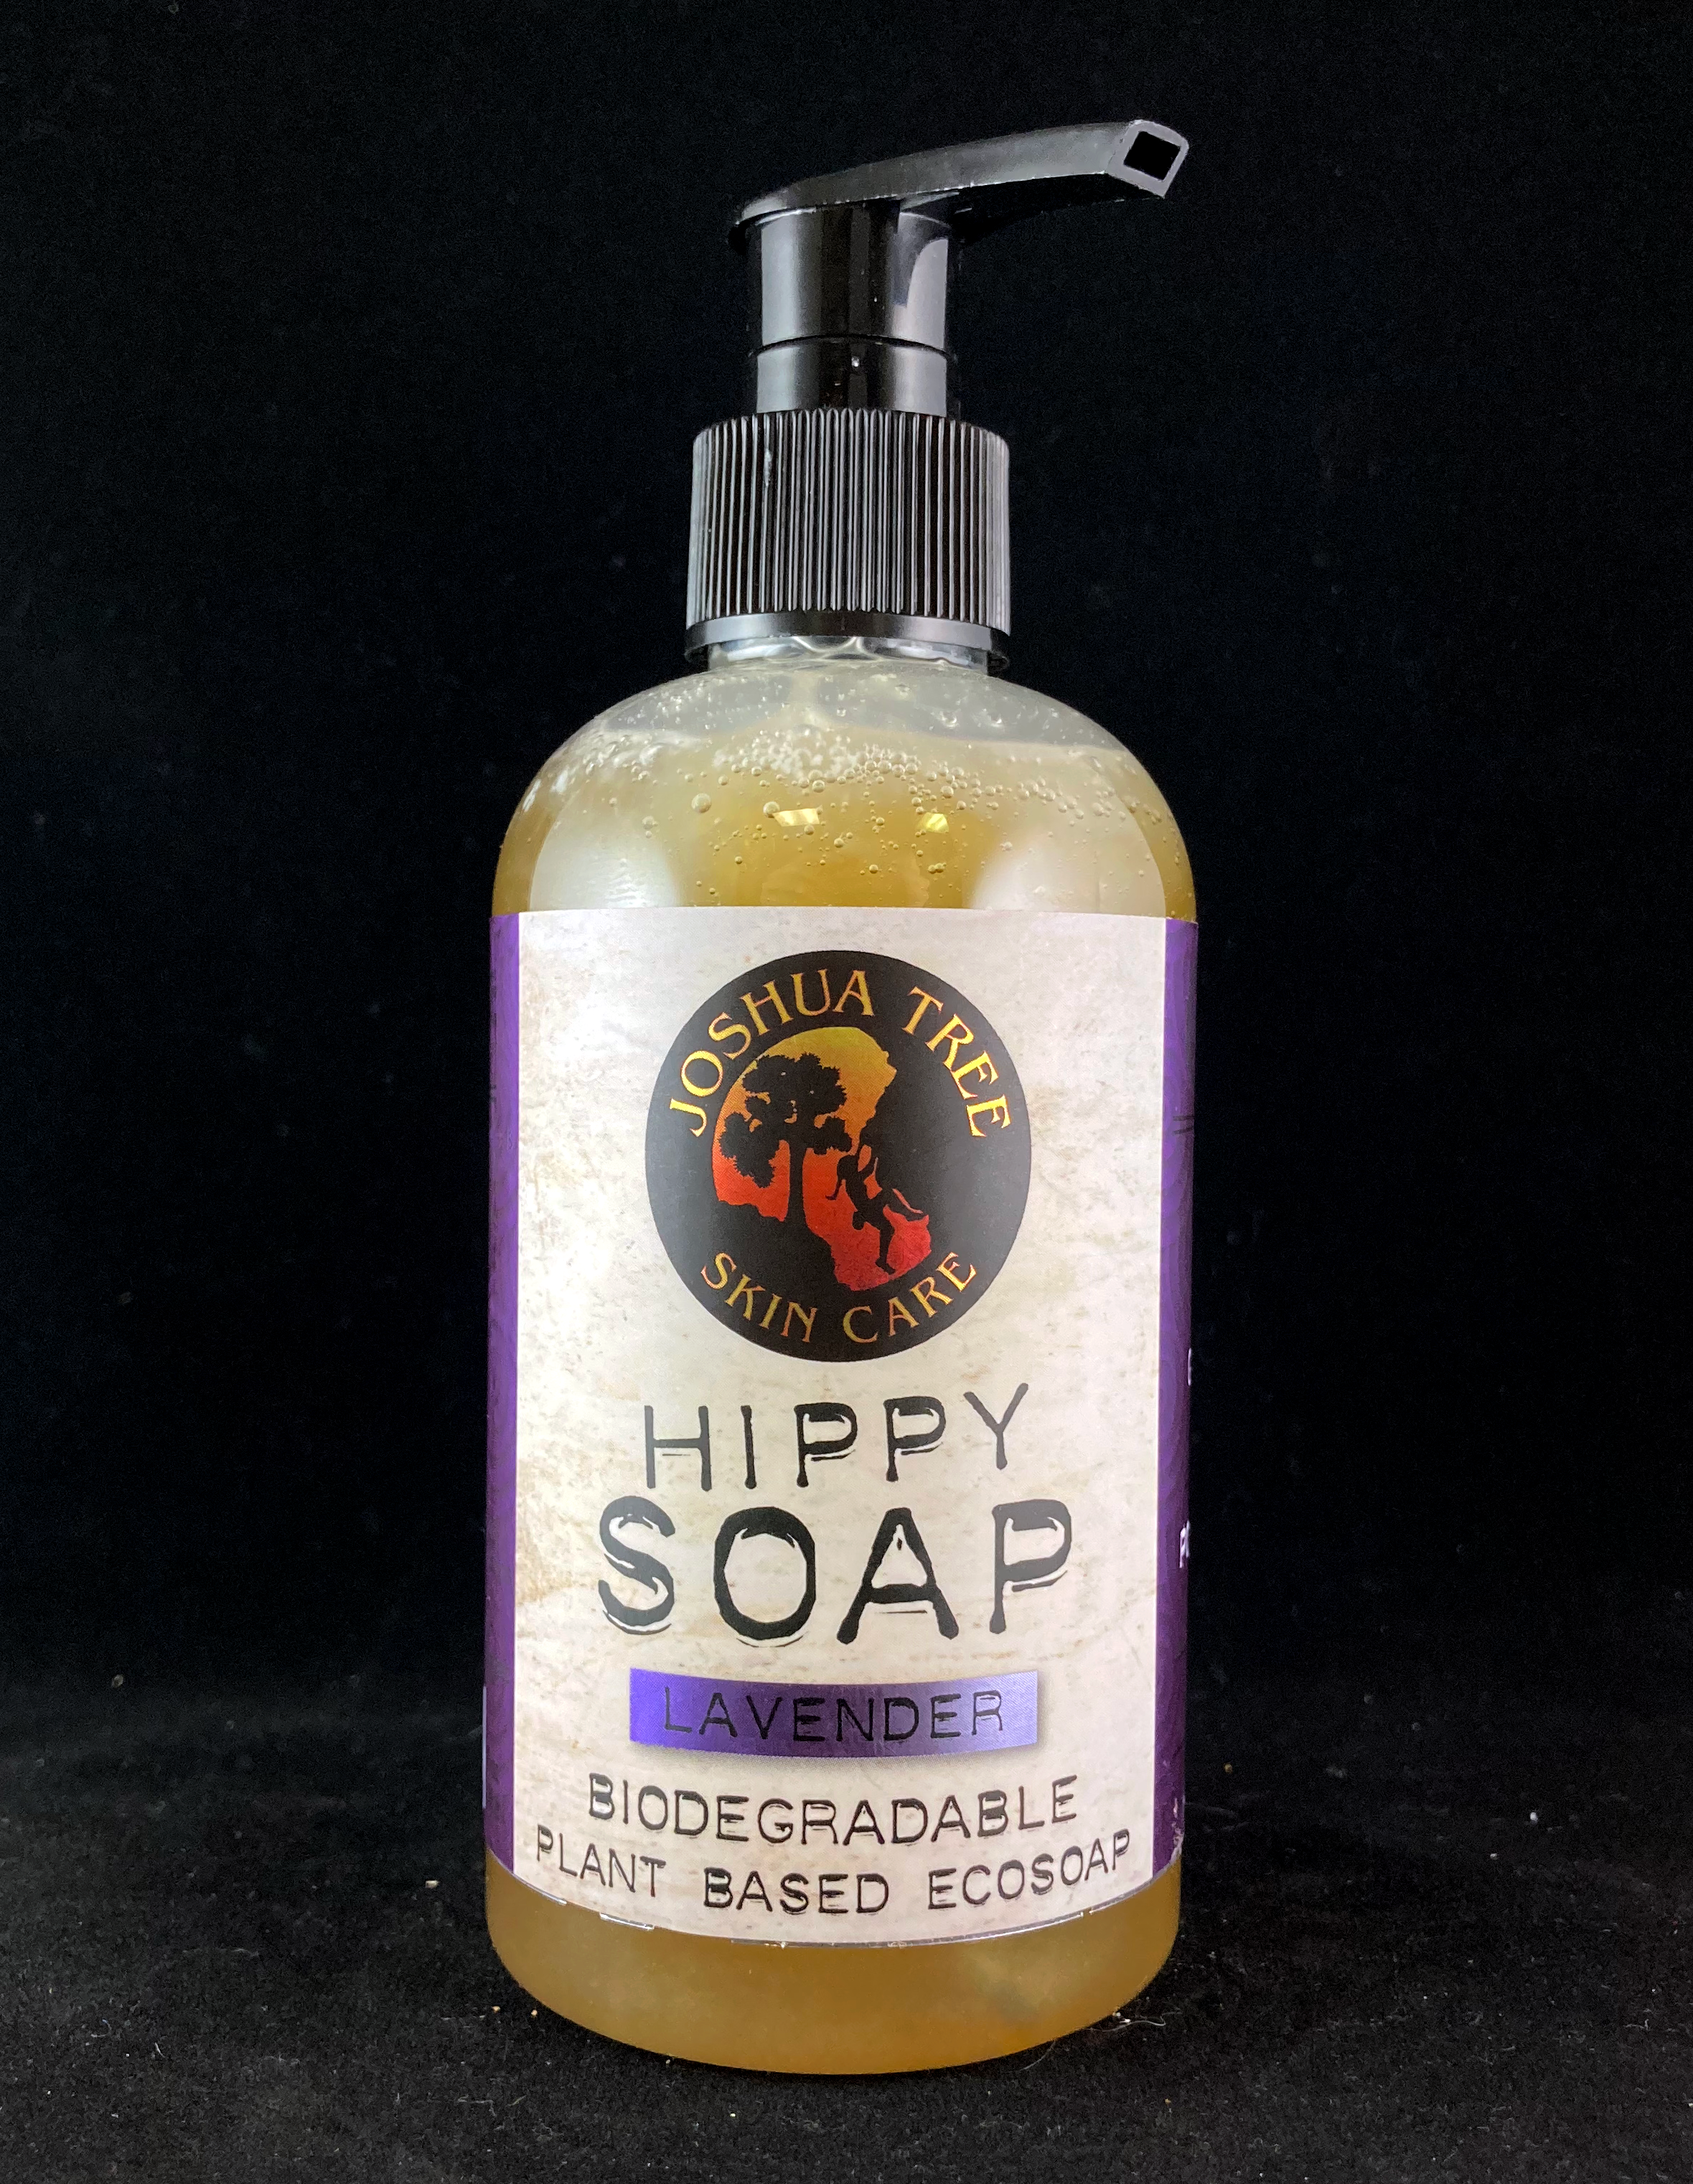 Hippy Soap - 4 Flavors